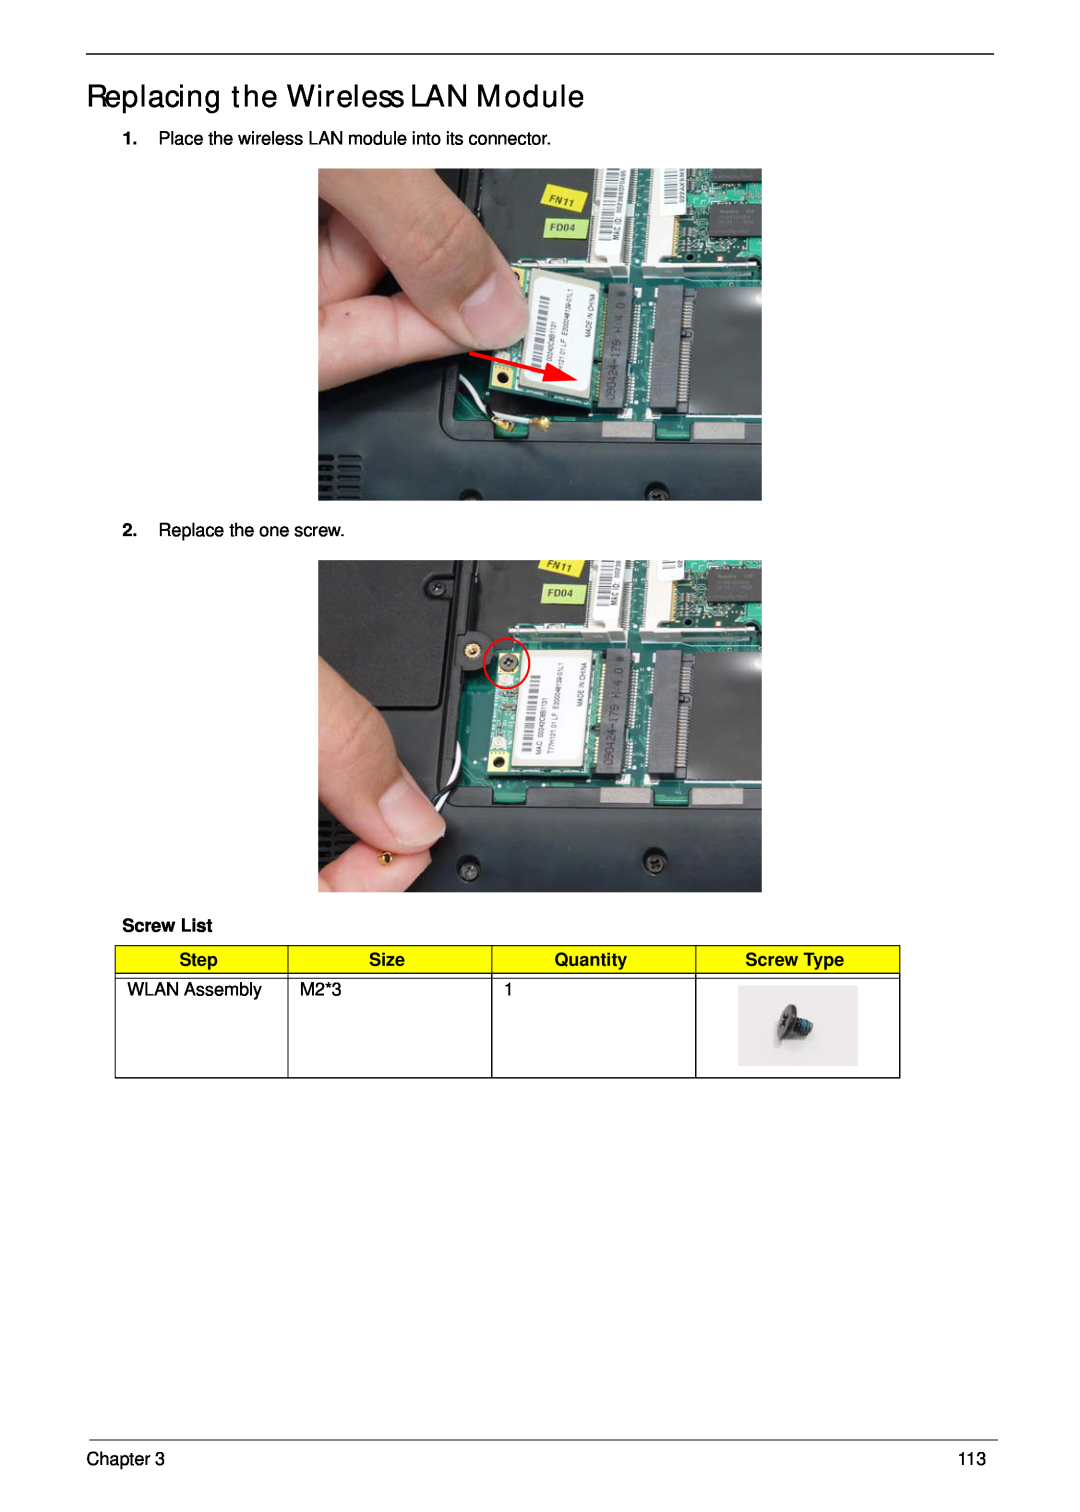 Gateway EC14 manual Replacing the Wireless LAN Module, Screw List, Step, Size, Quantity, Screw Type, WLAN Assembly, M2*3 